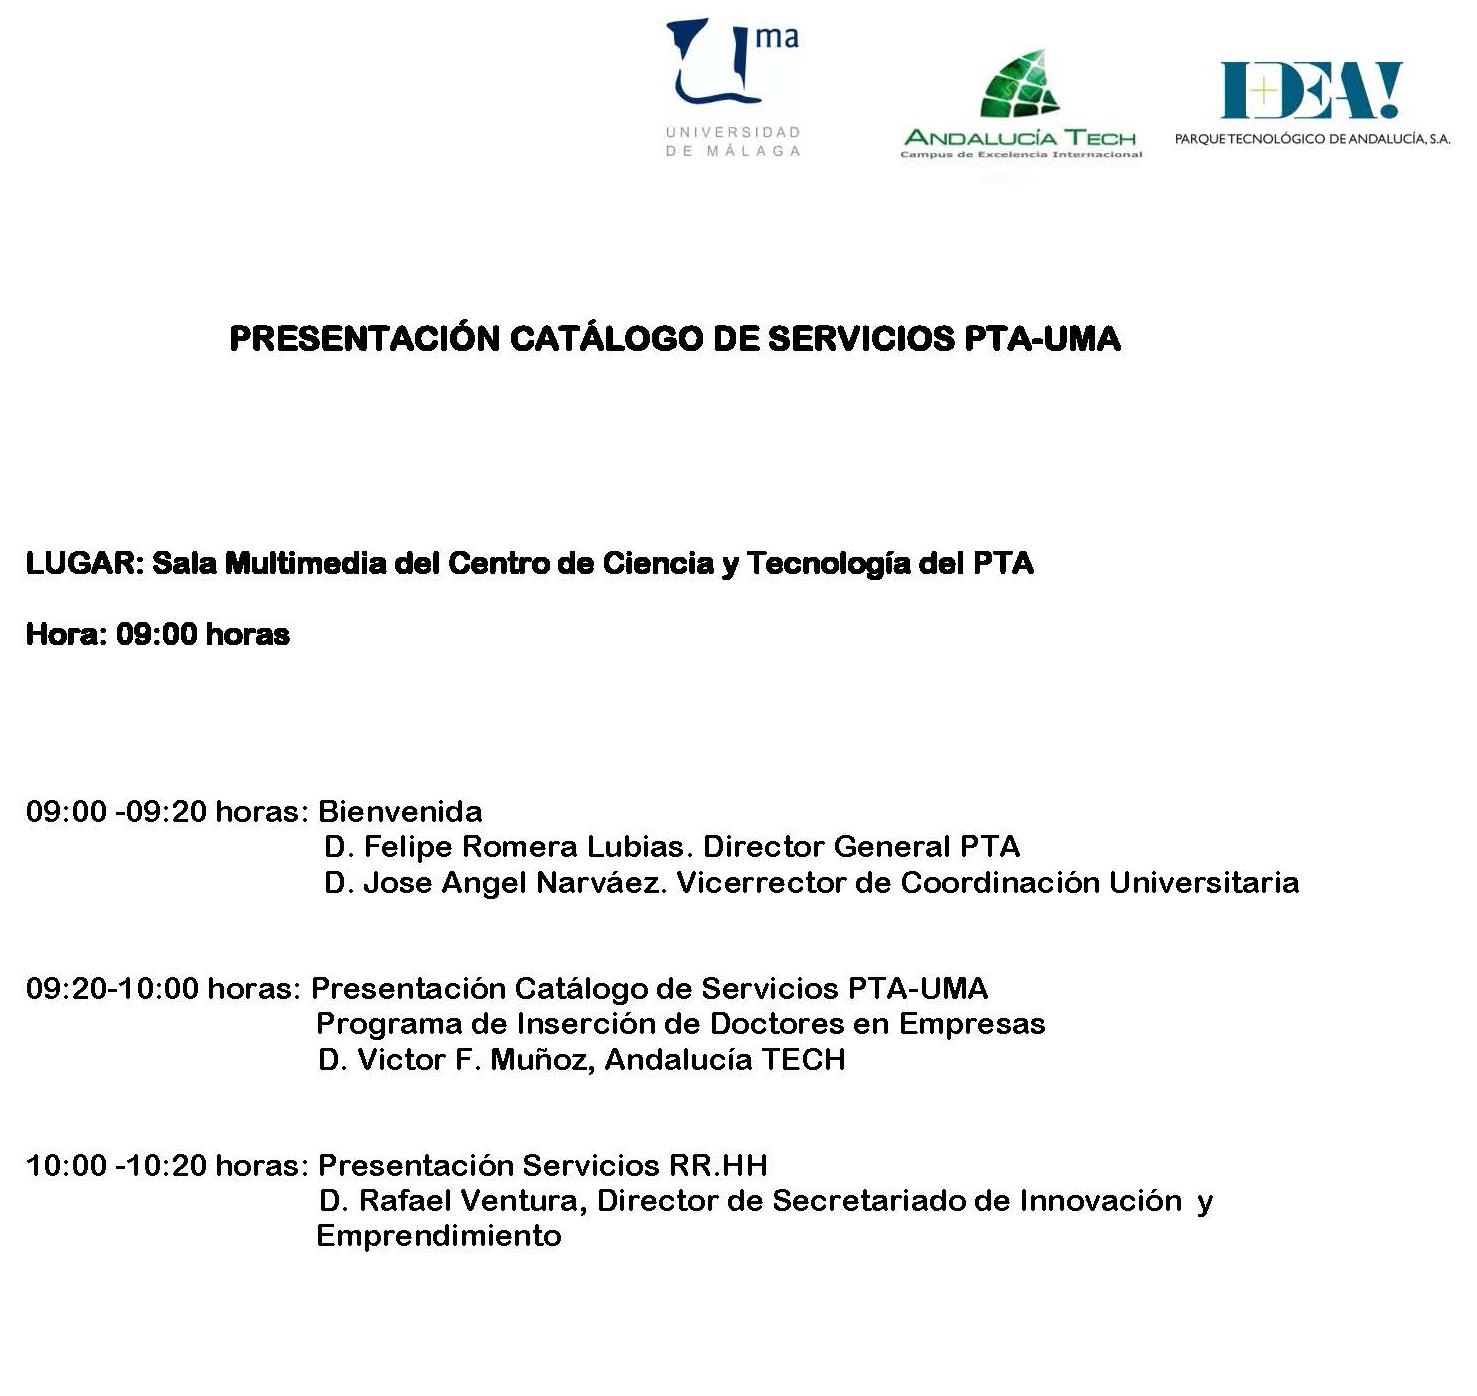 OTRI - Presentacion Catalogo PTA-UMA